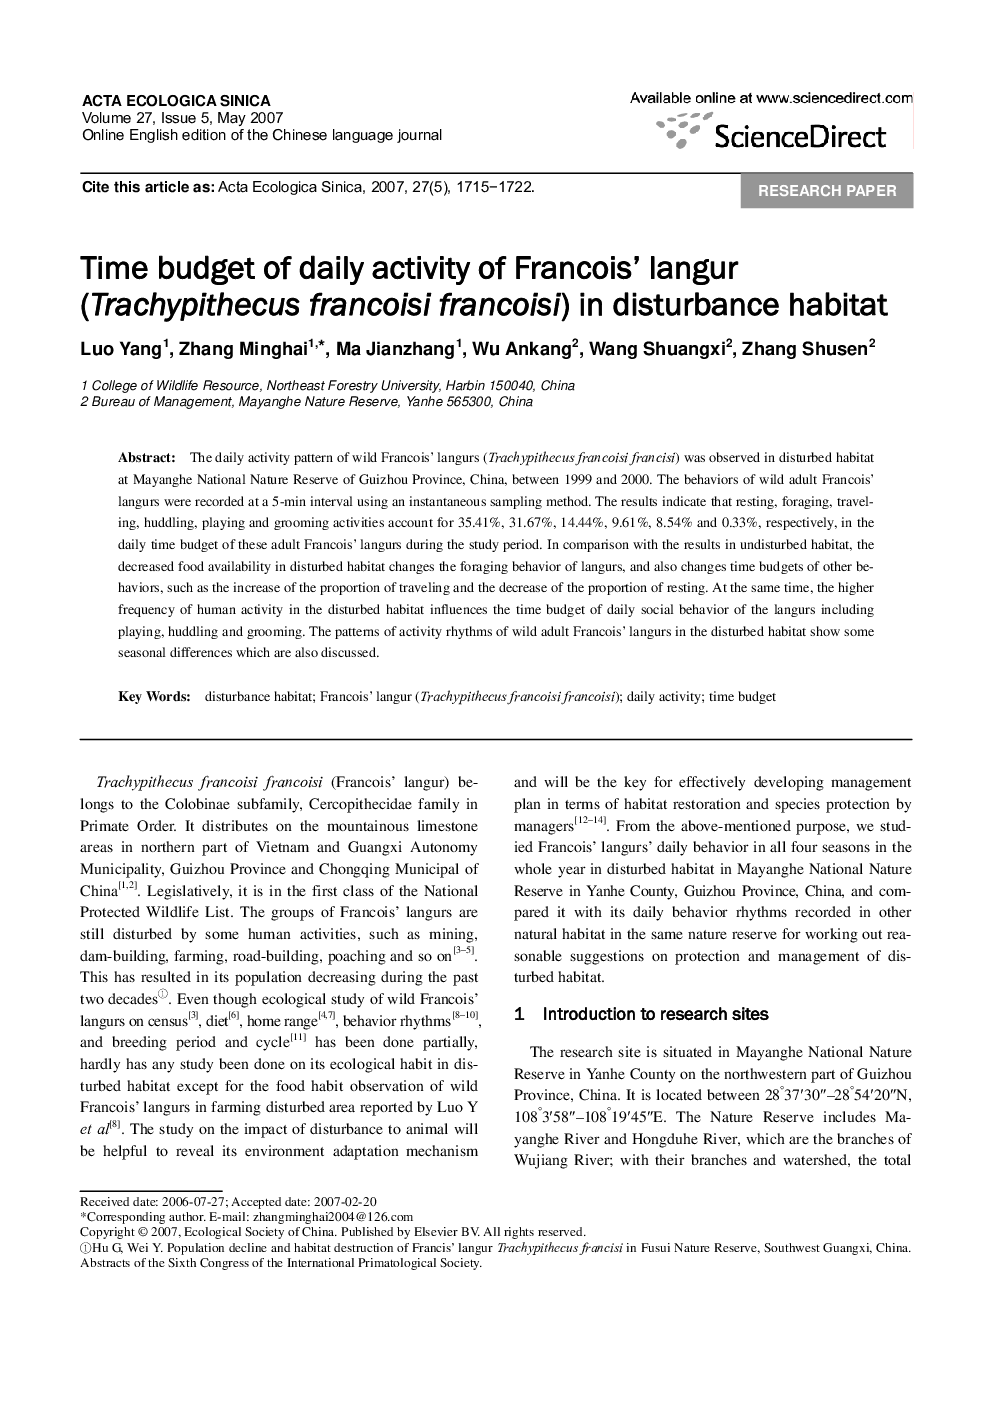 Time budget of daily activity of Francois' langur (Trachypithecus francoisi francoisi) in disturbance habitat